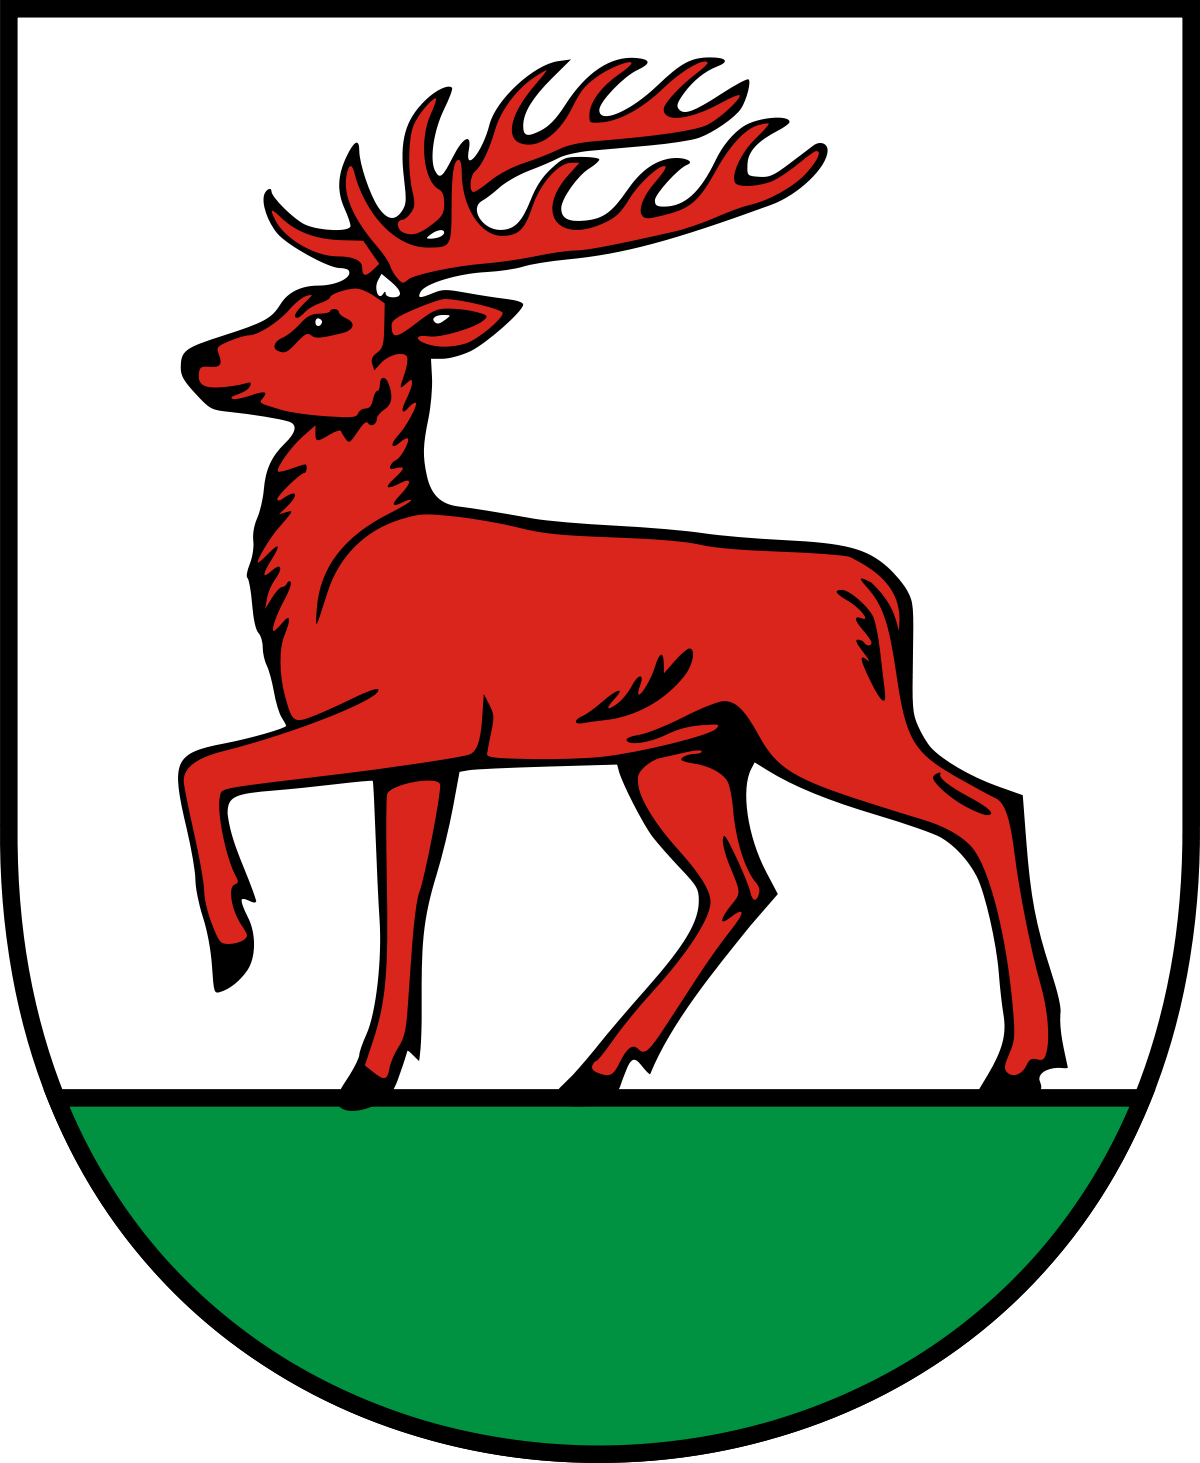 Herb miasta Rzepin